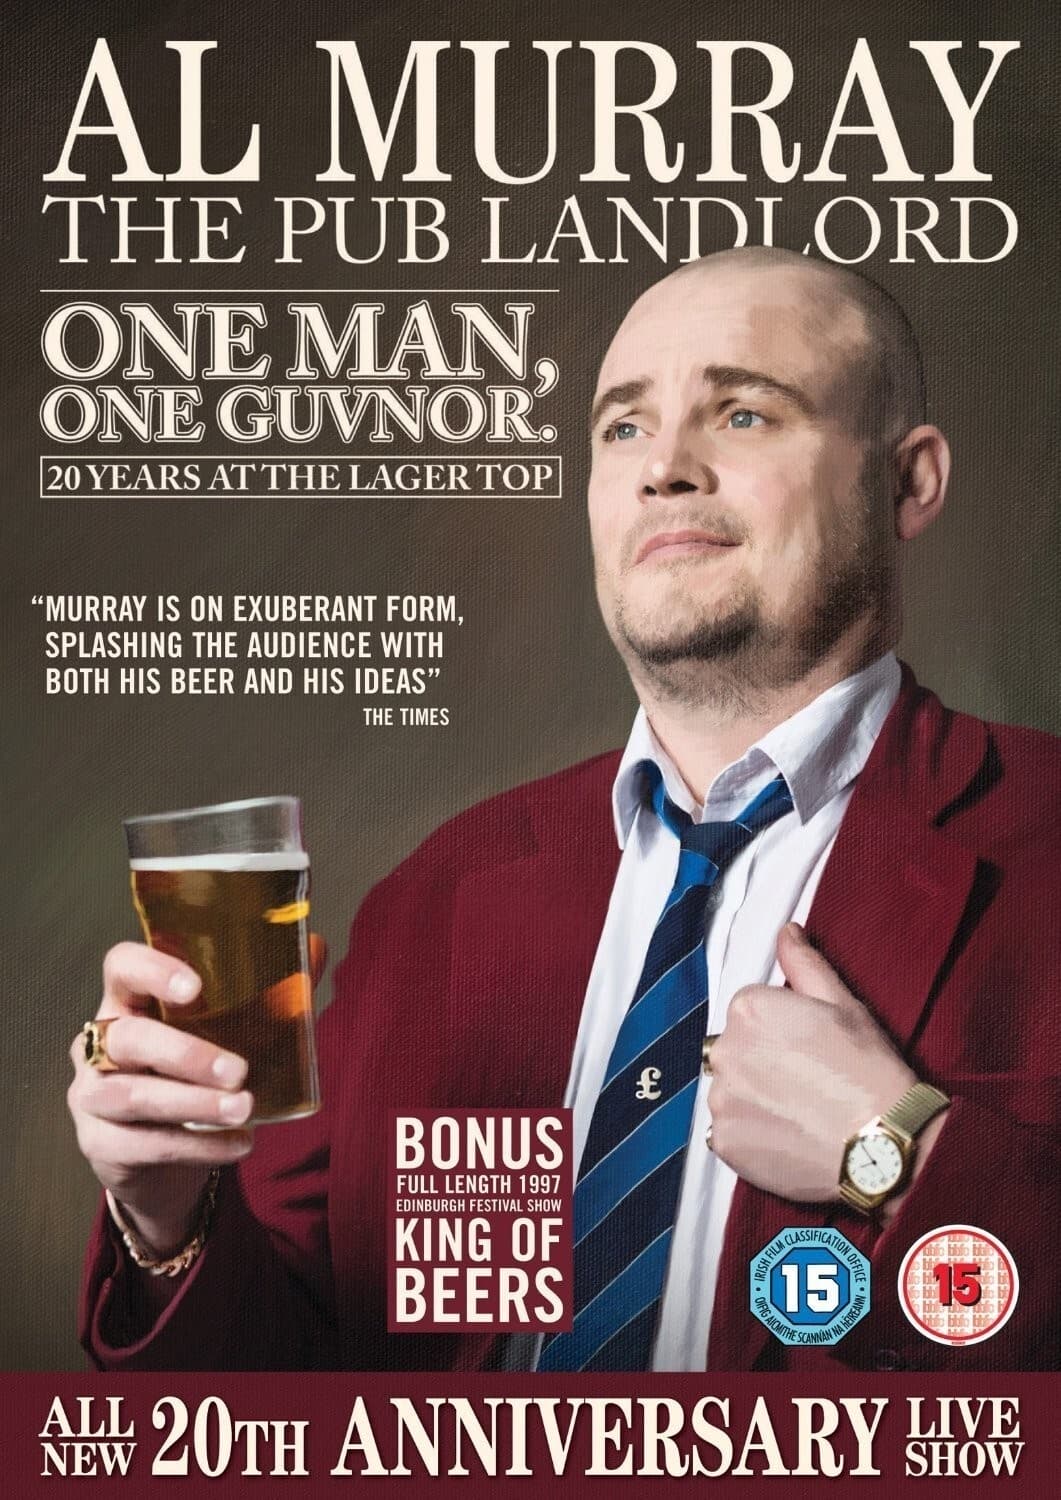 Al Murray, The Pub Landlord - One Man, One Guvnor